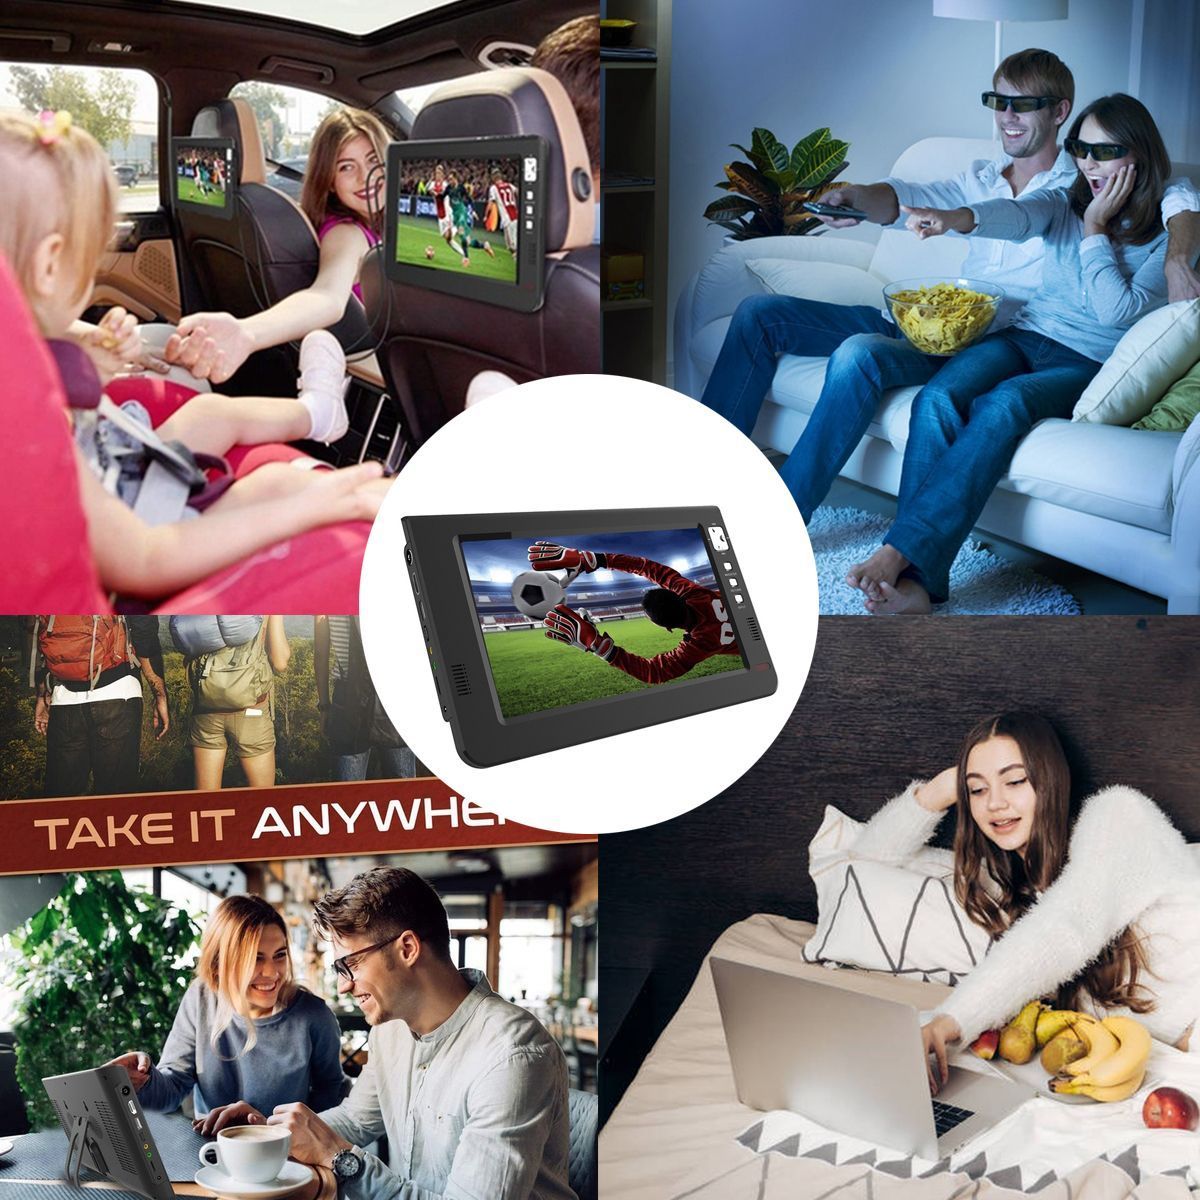 Portable-101-TFT-LED-DVBT2-Digital-Analog-TV-1080P-HDMI-IN-H265-Car-Television-Support-USB-TF-Card-R-1614938